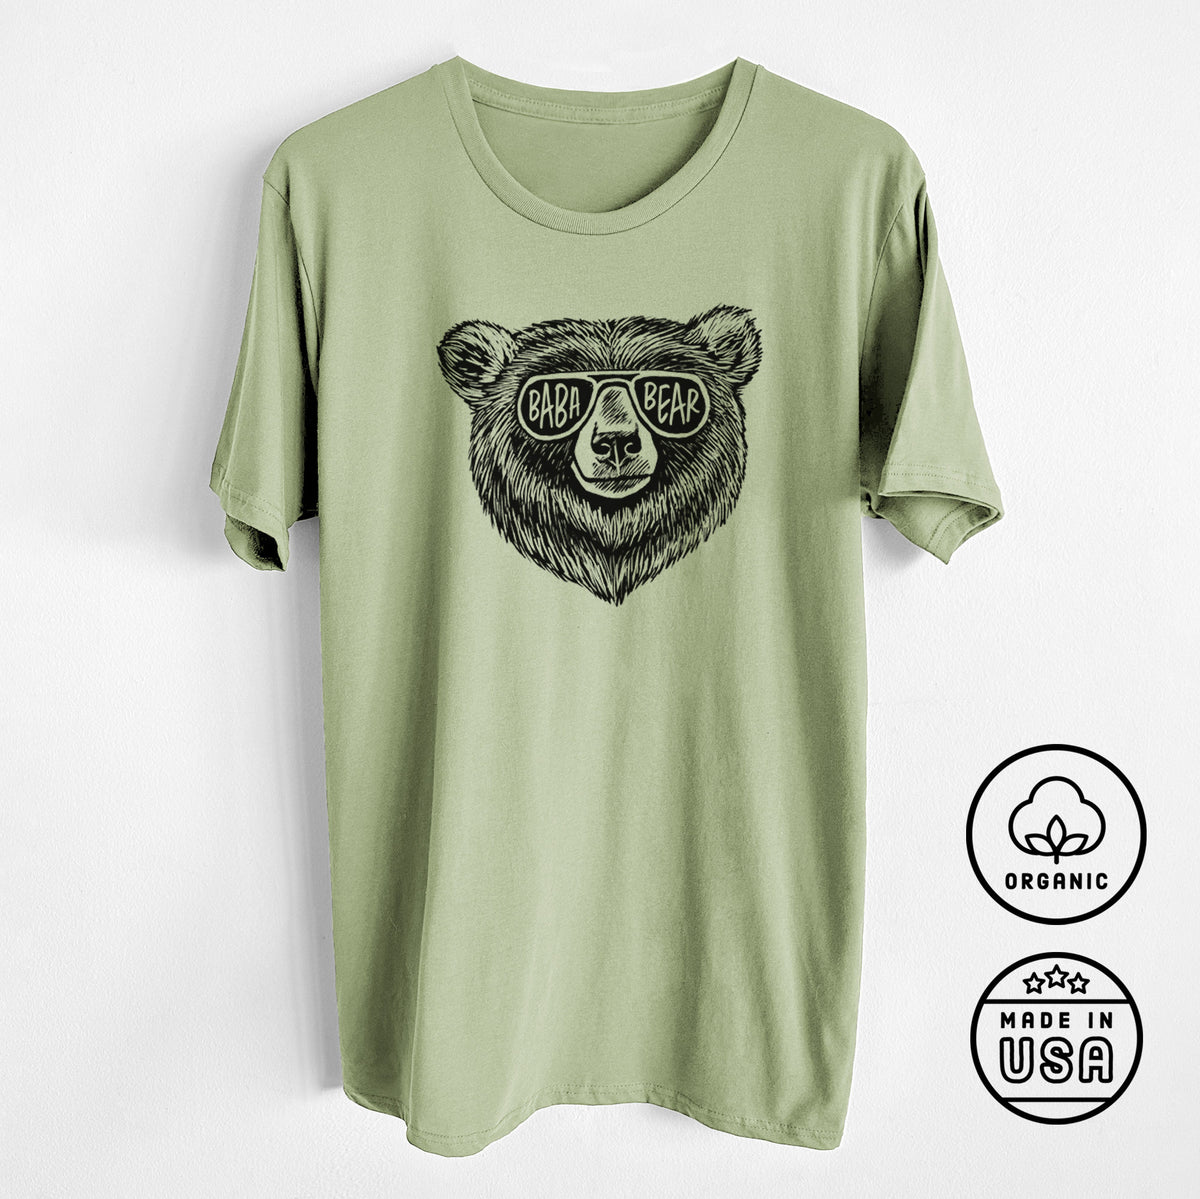 Baba Bear - Unisex Crewneck - Made in USA - 100% Organic Cotton